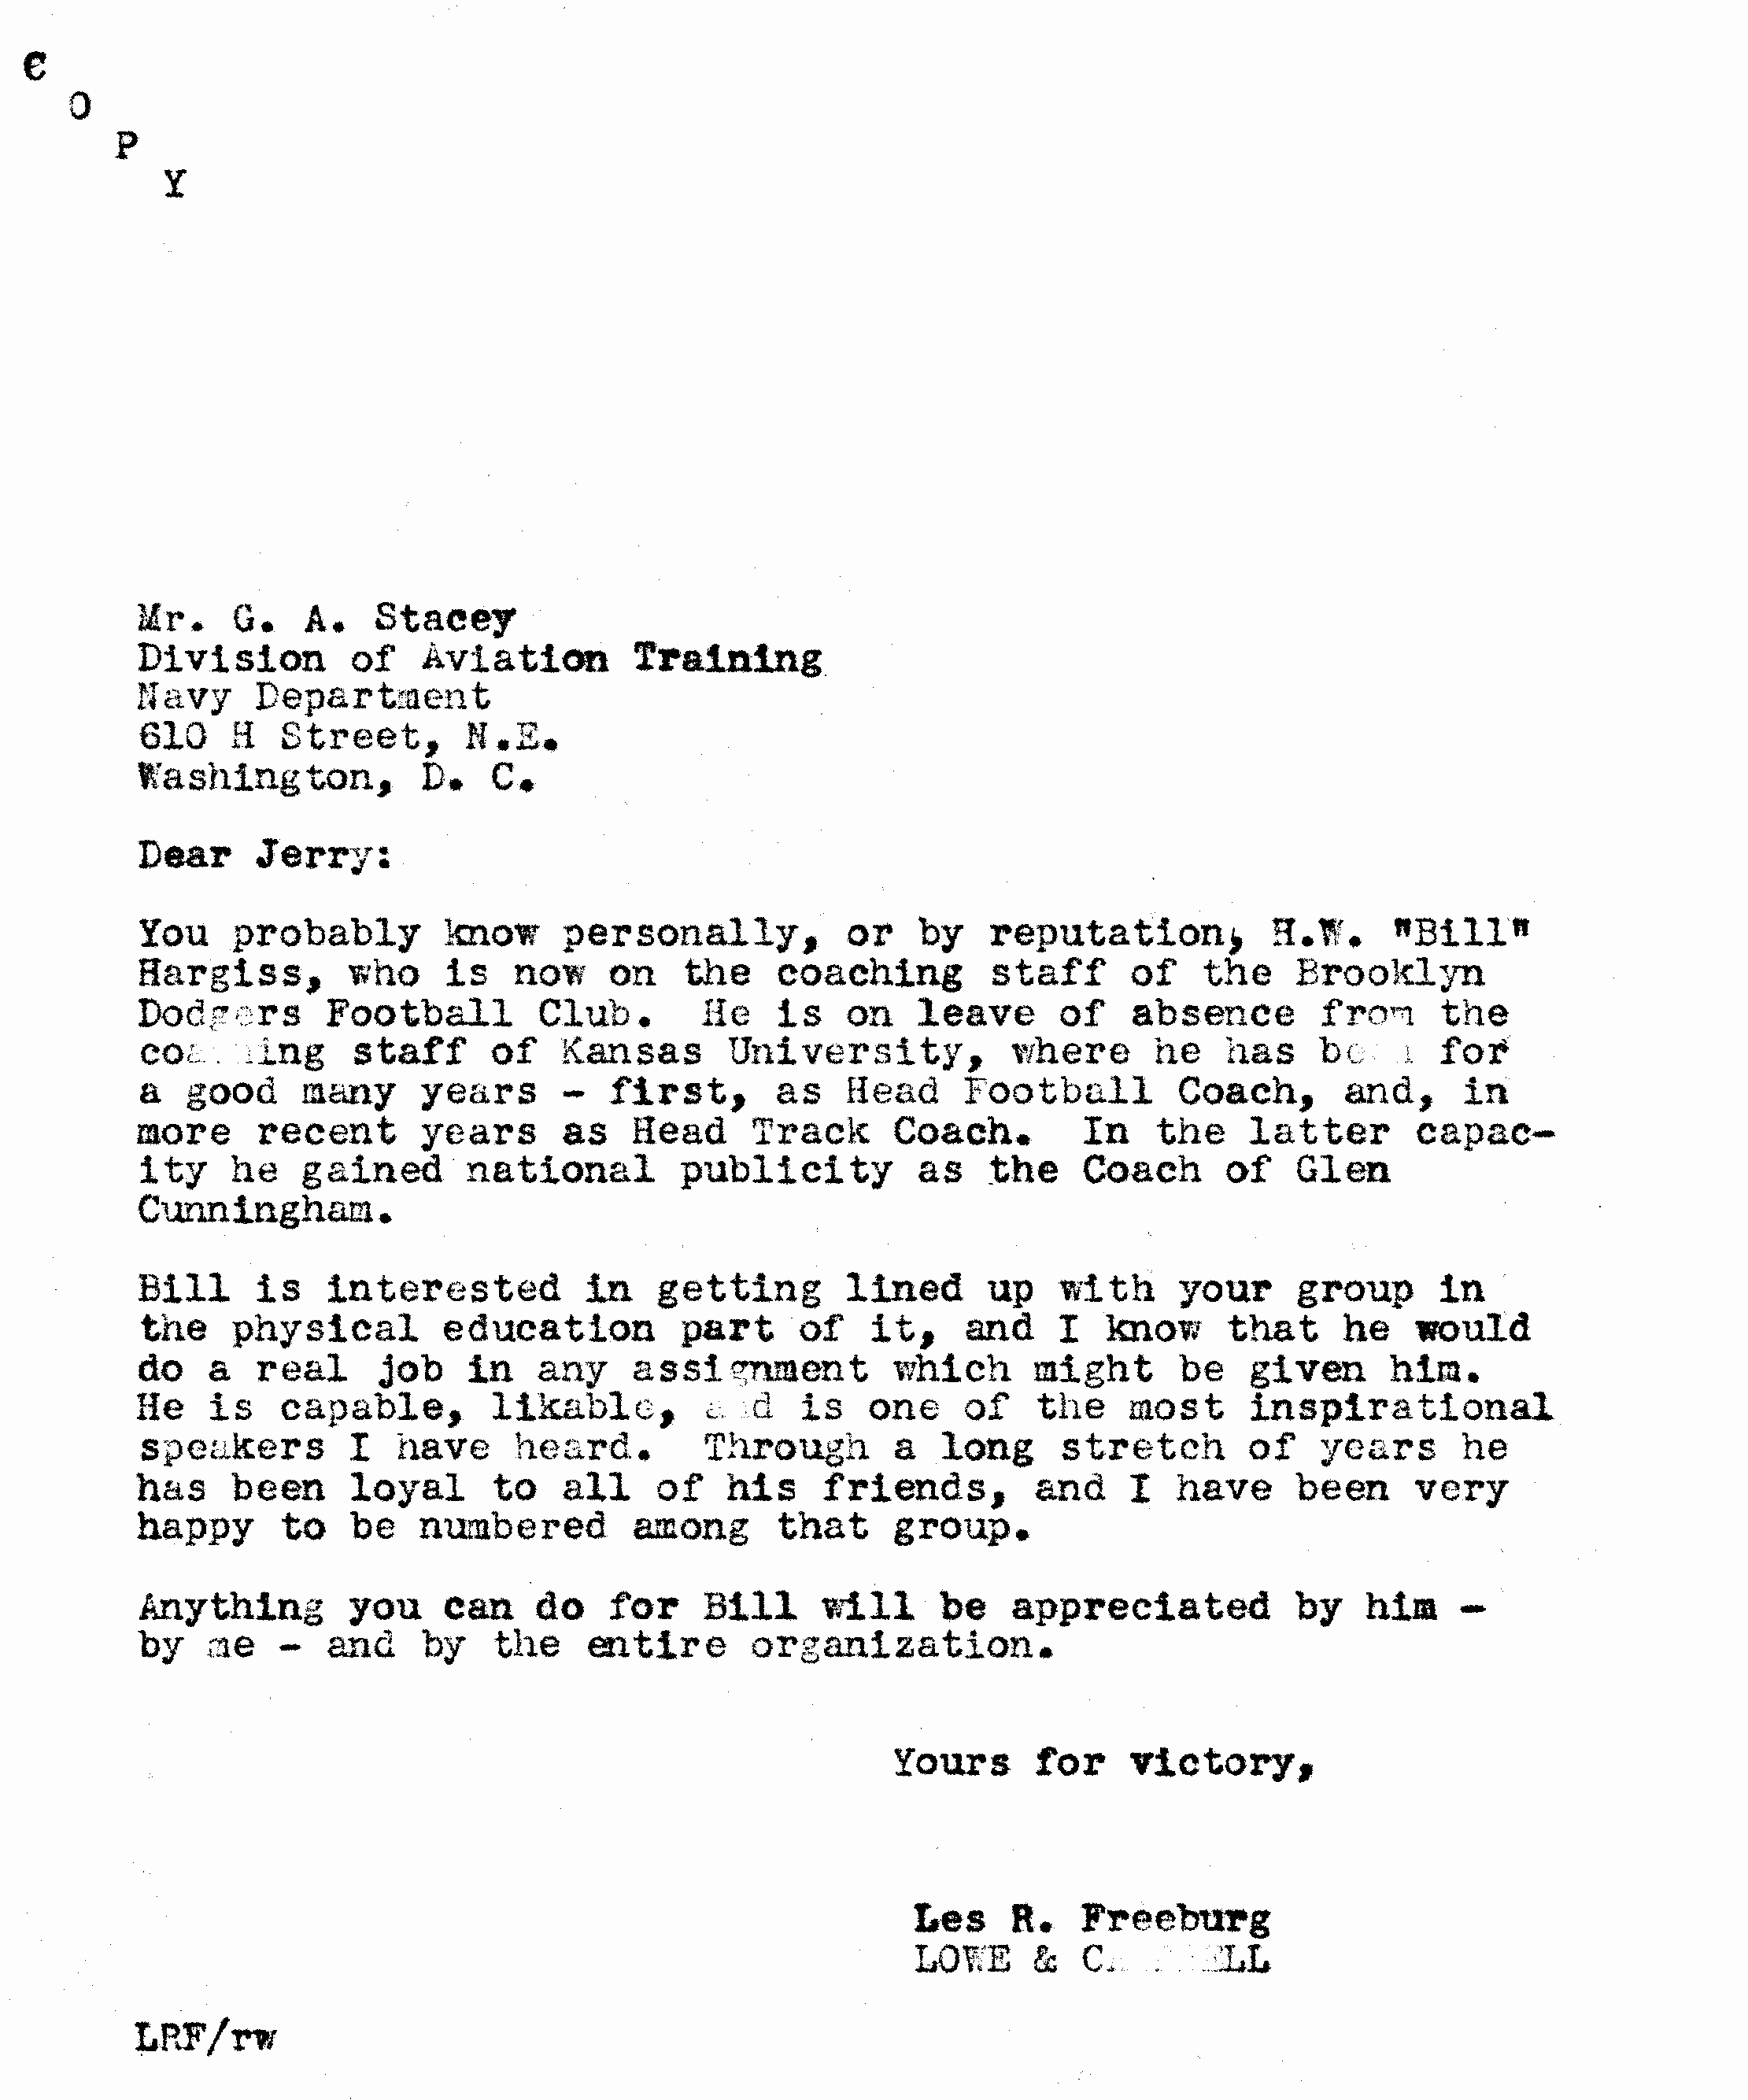 Naval Academy Recommendation Letter Unique Les Freeburg Letter Re Mending Hargiss to Us Navy